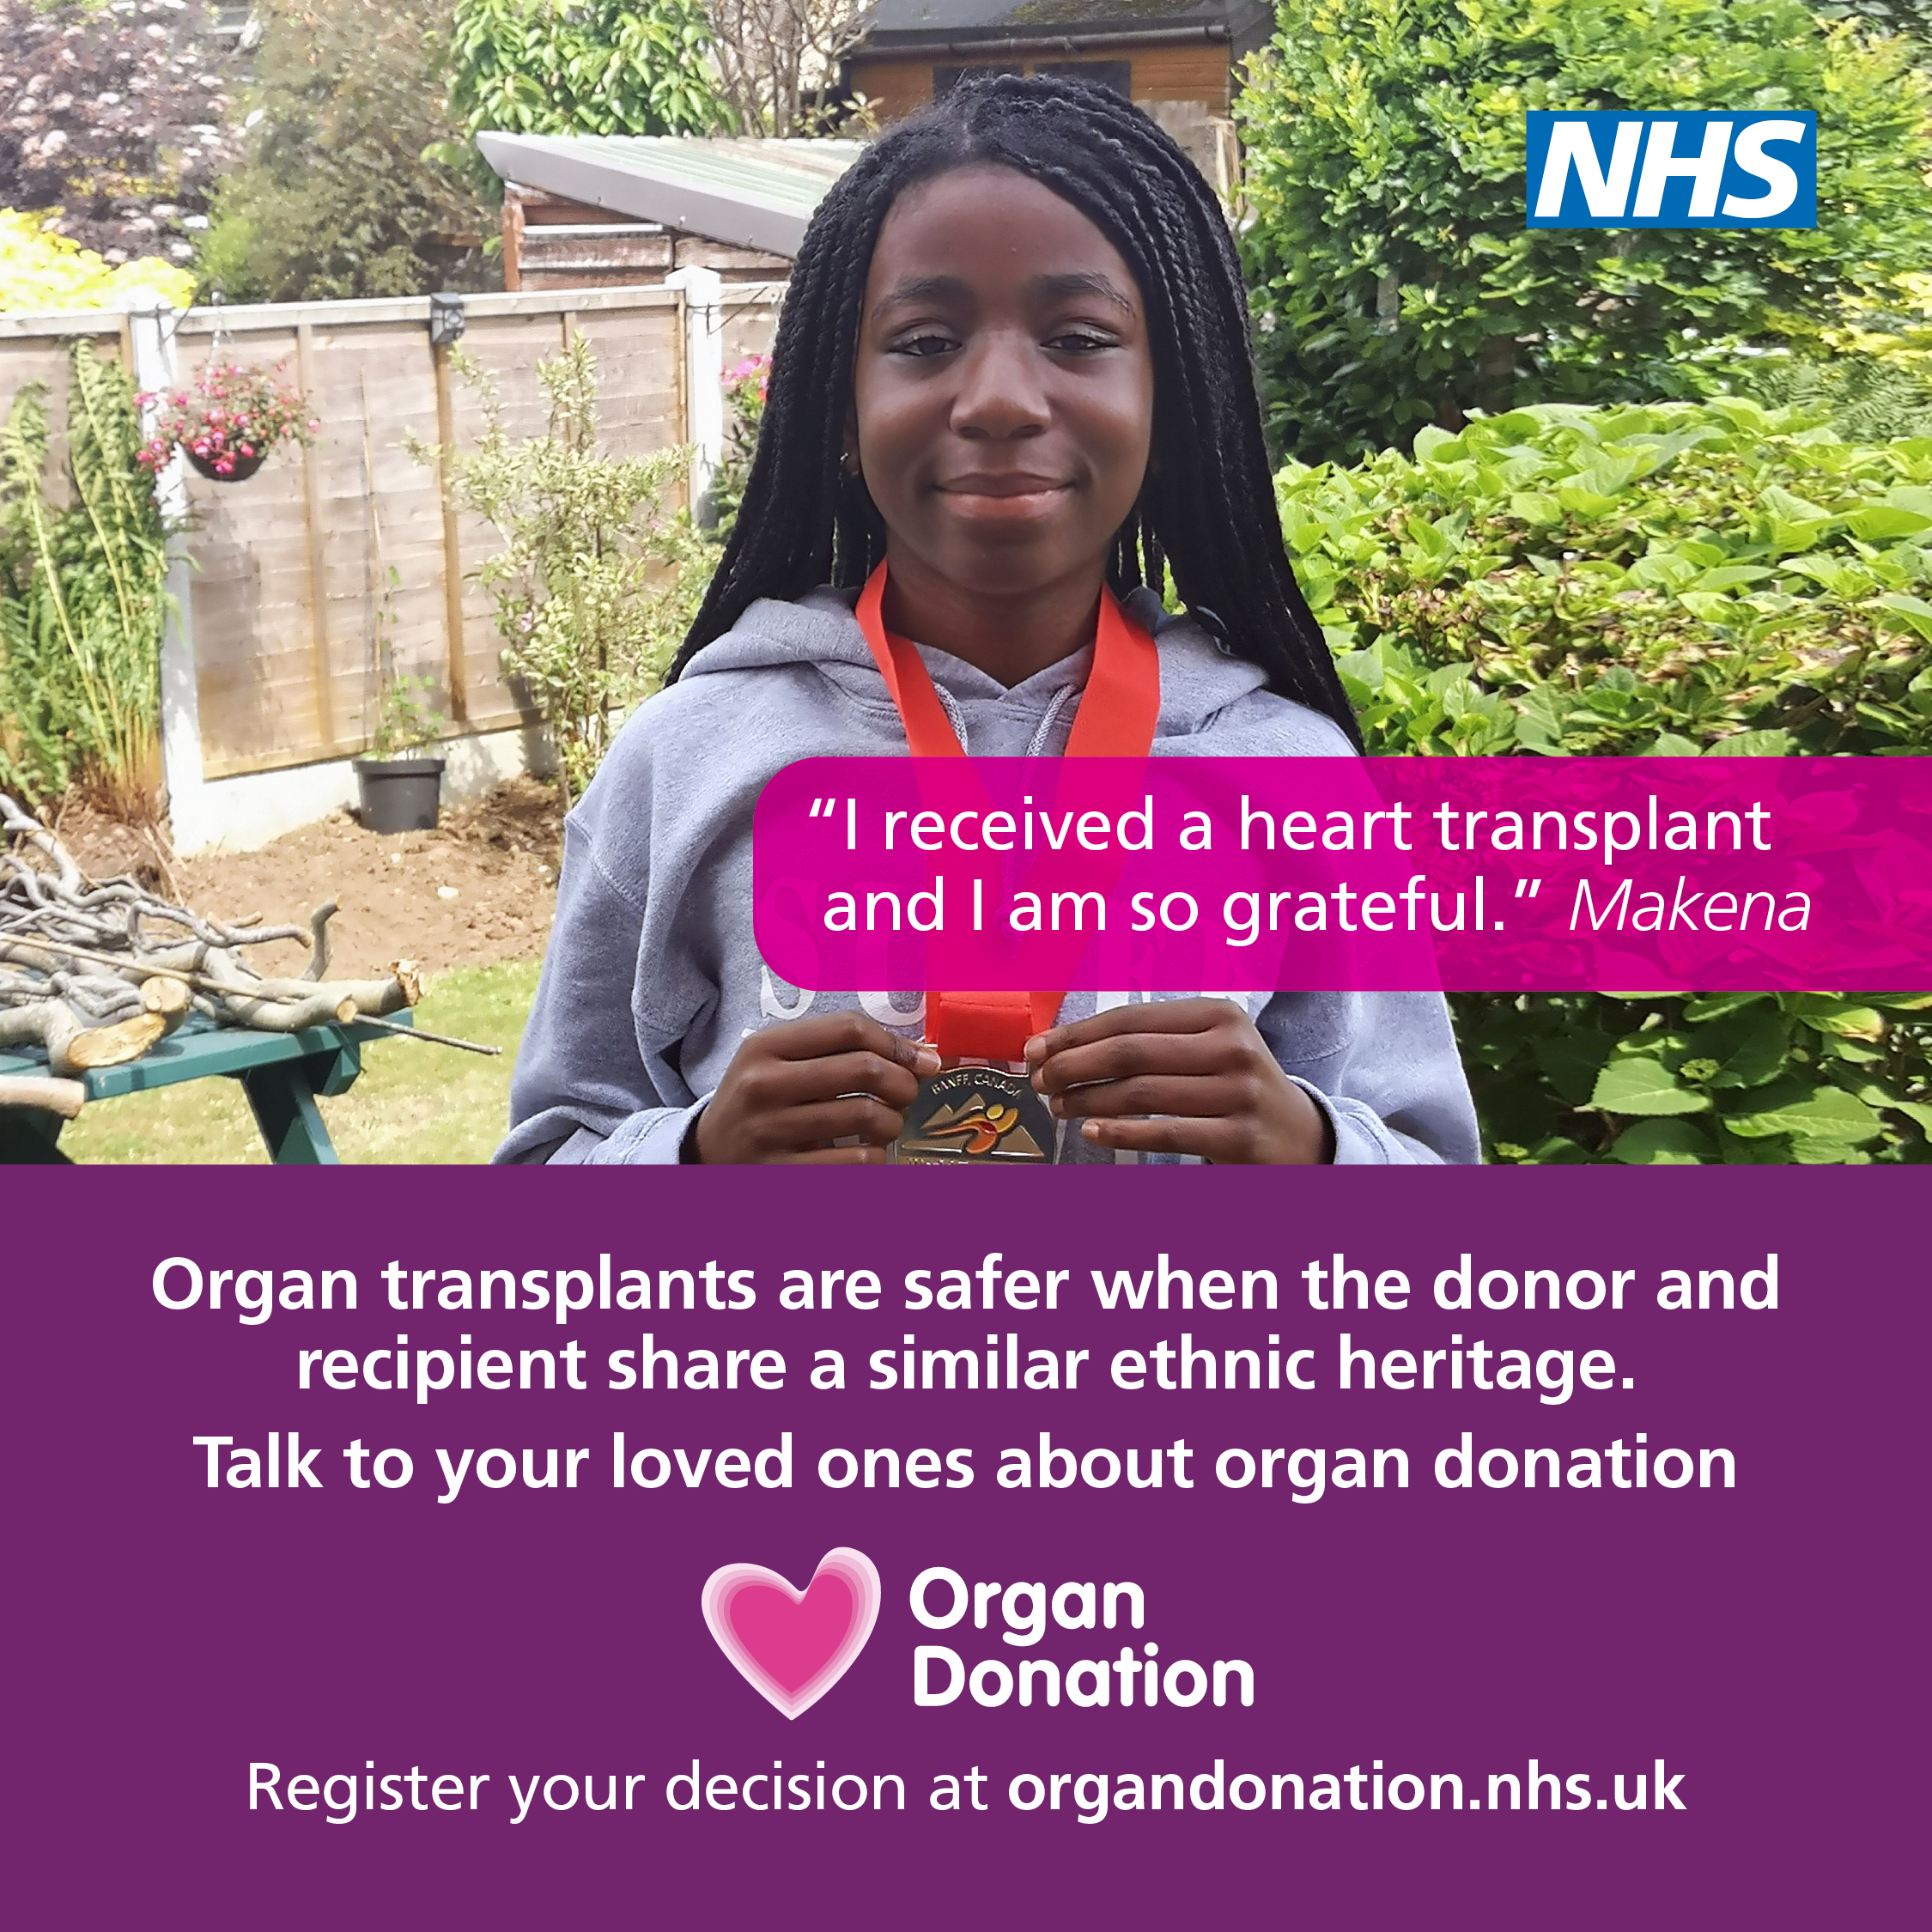 Makena received a heart transplant